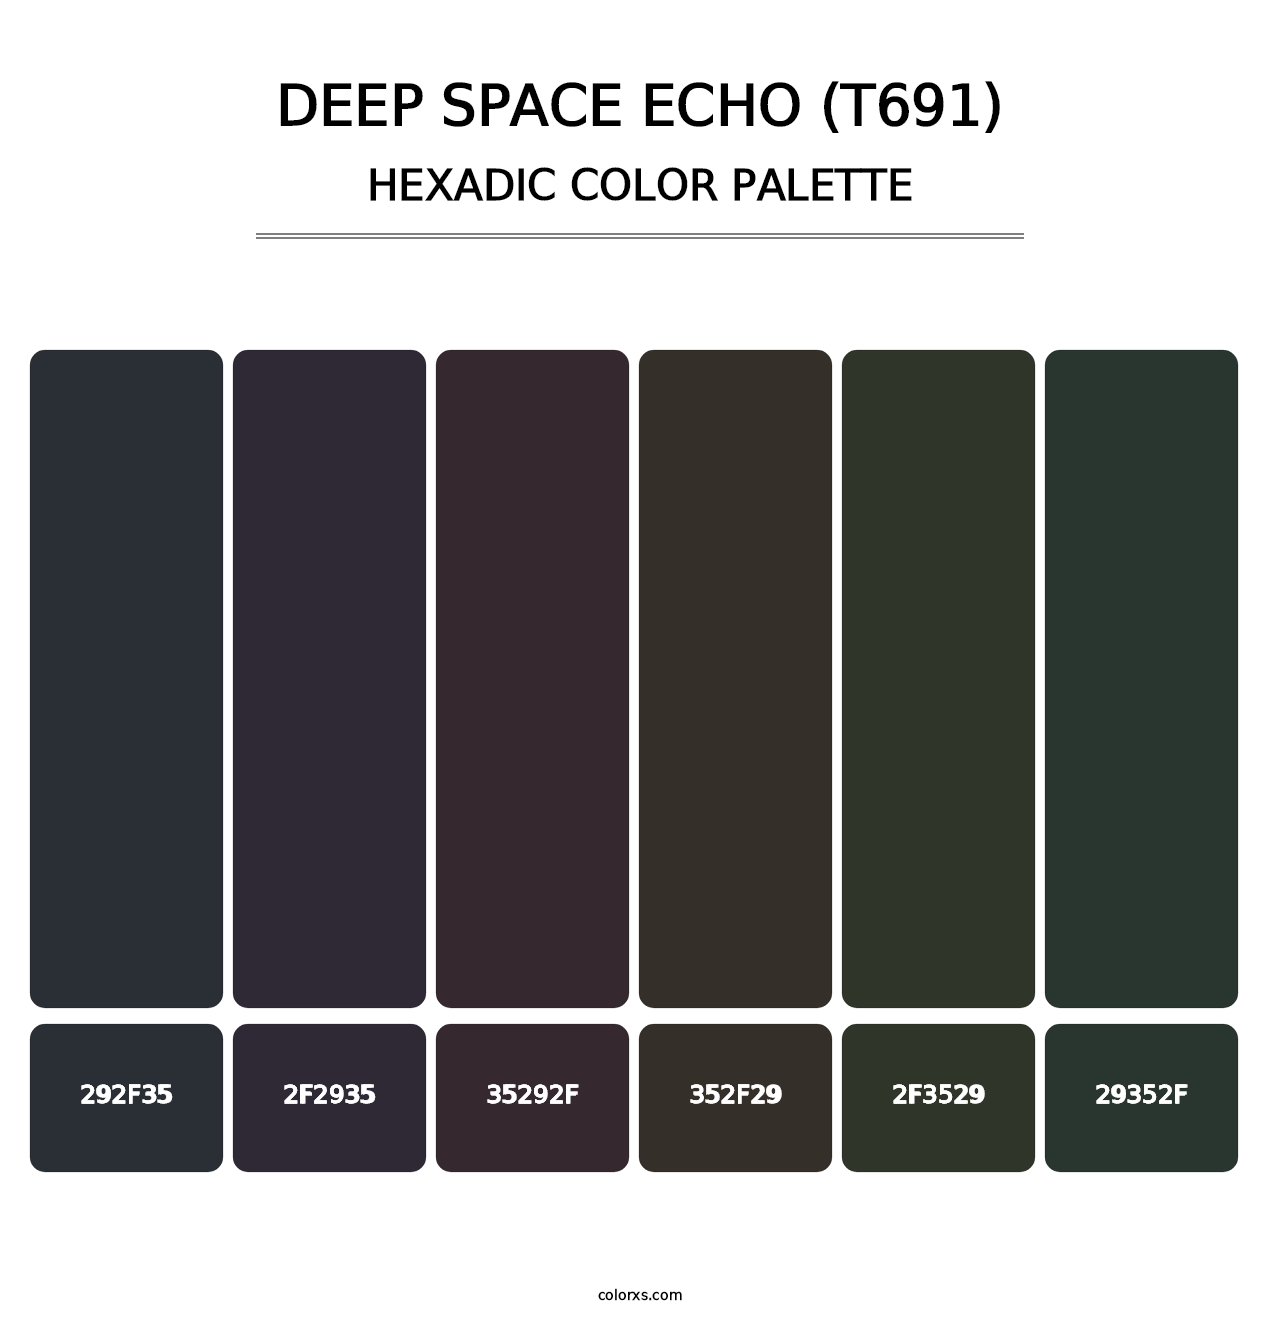 Deep Space Echo (T691) - Hexadic Color Palette